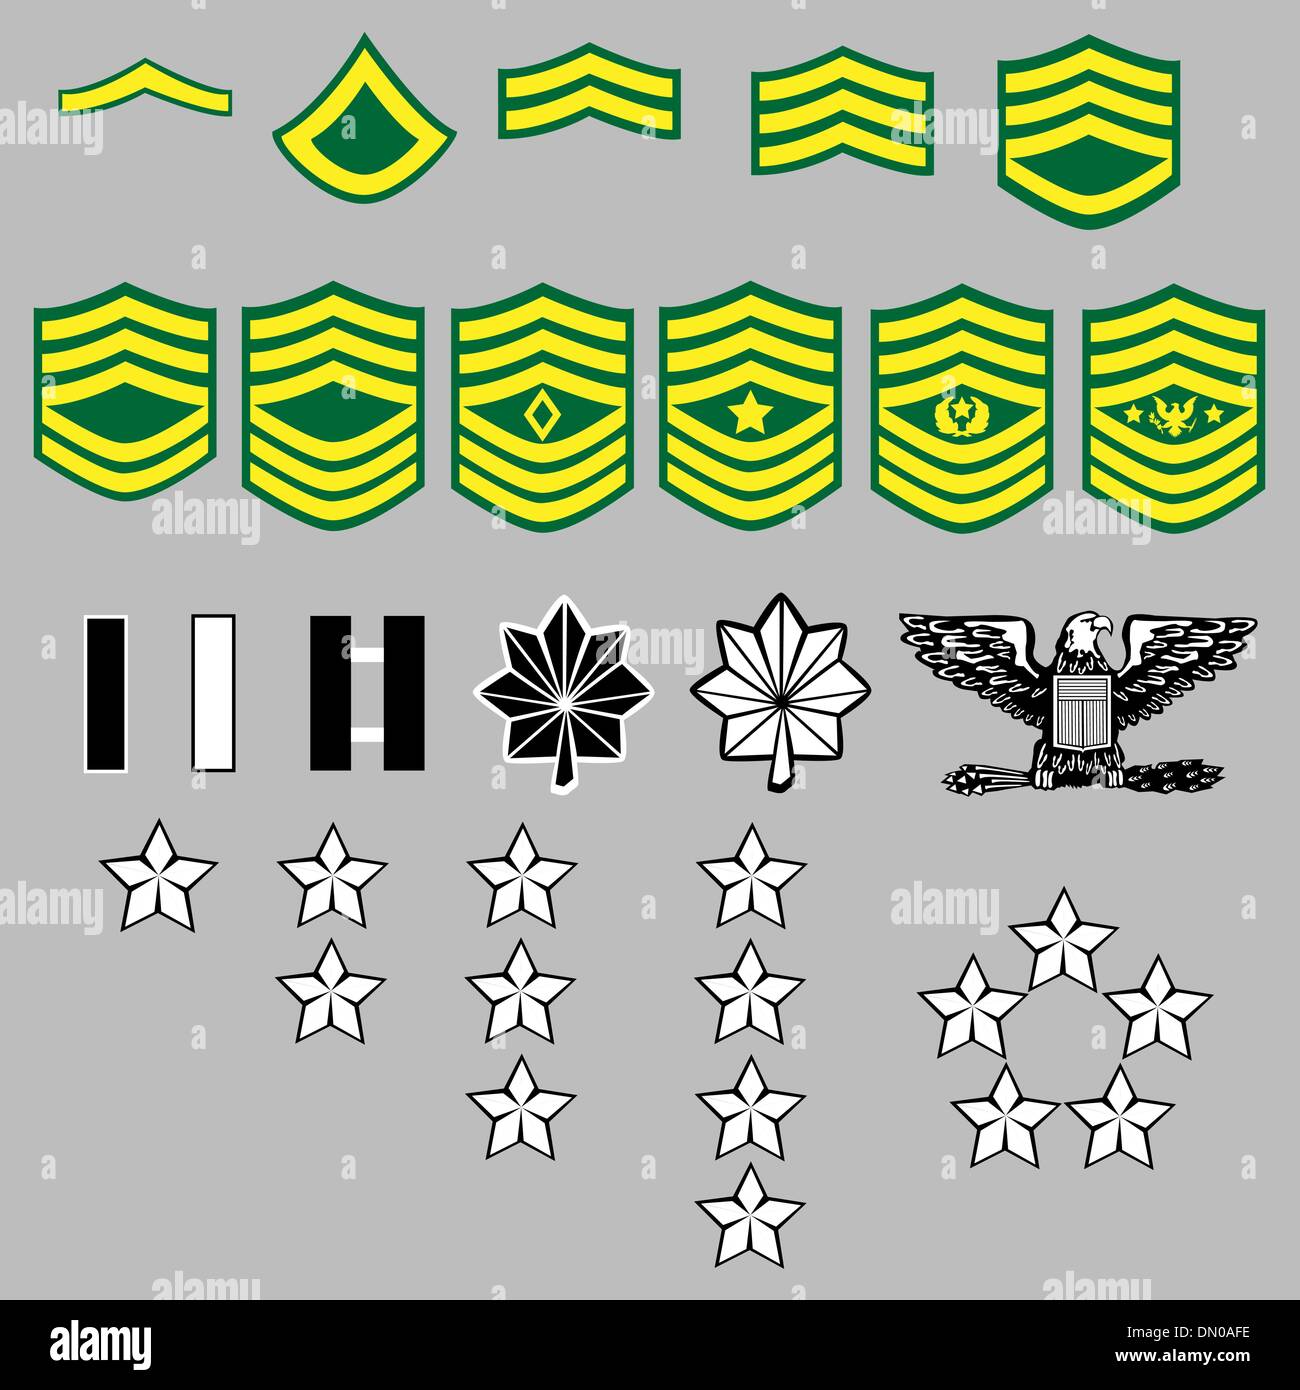 Us military insignia rank Military Ranks